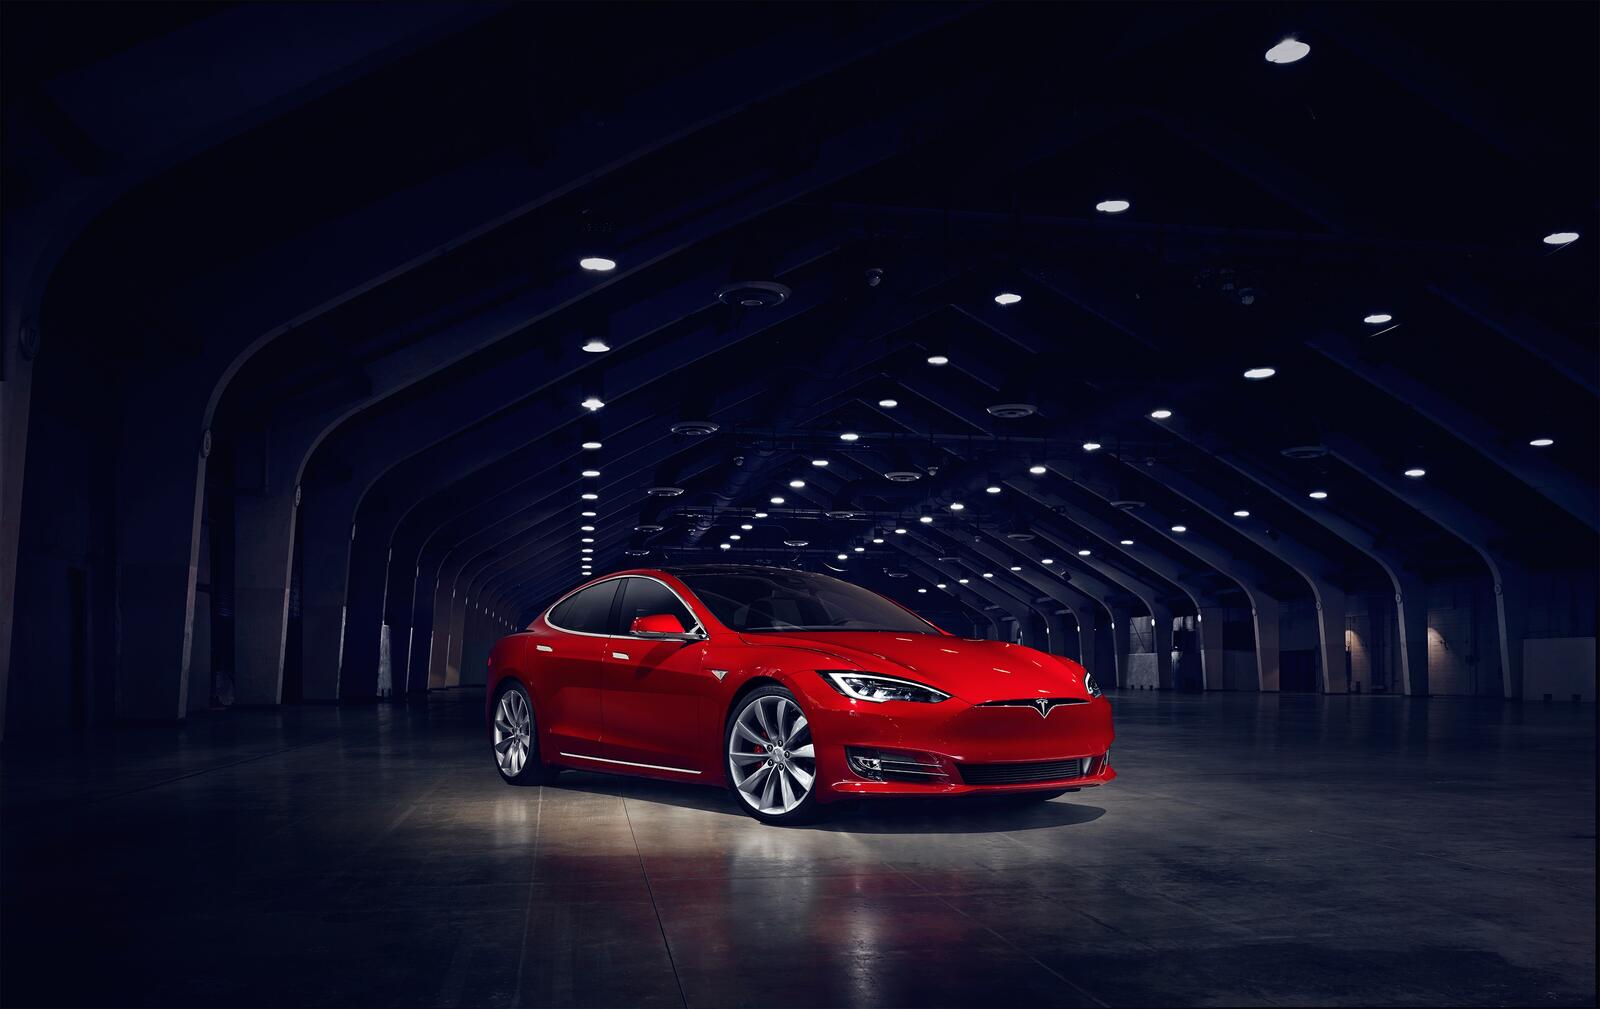 Wallpapers Tesla Model S cars luxury on the desktop